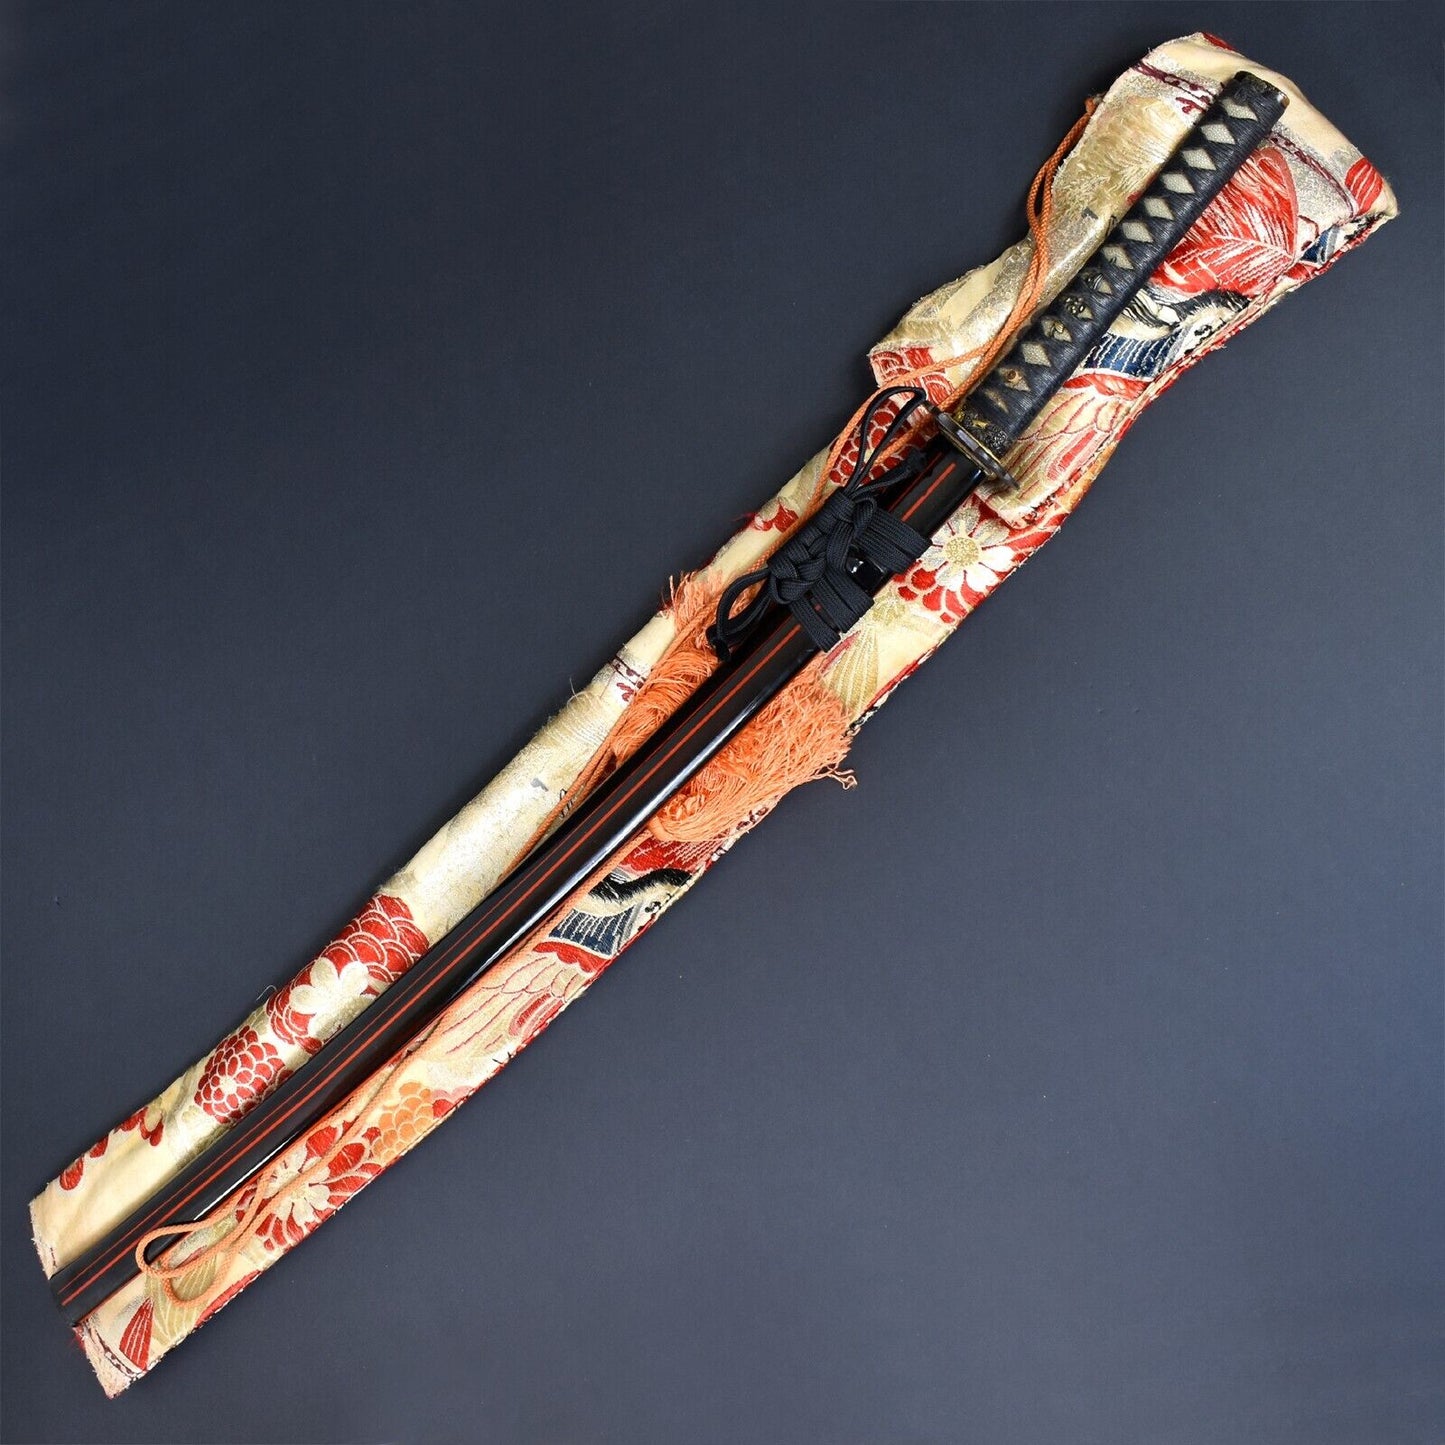 Genuine Collectible Nihonto Japanese Katana Long Sword Samurai Blade Weapon from Muromachi Era.